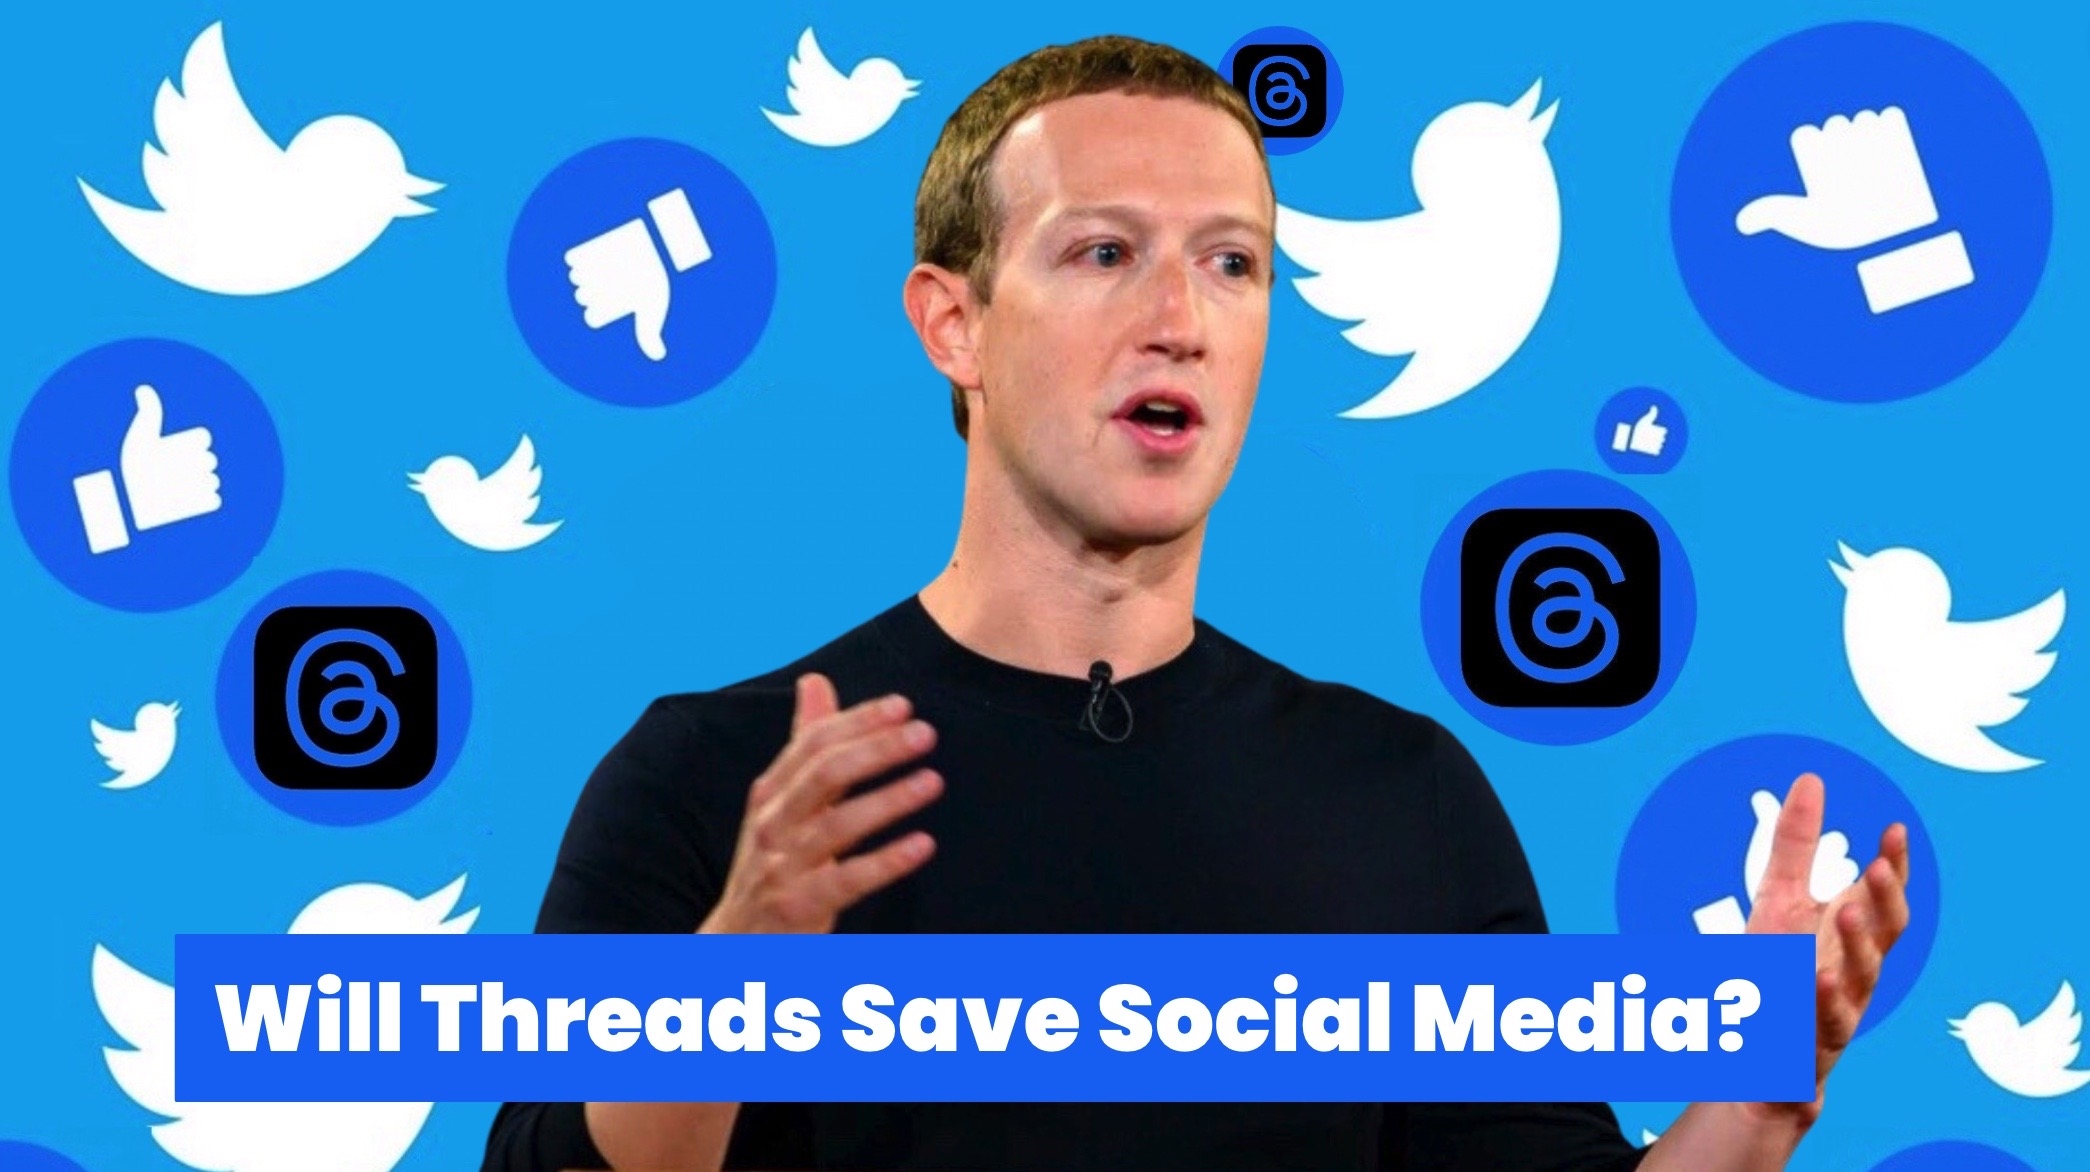 Will Threads Save Social Media?